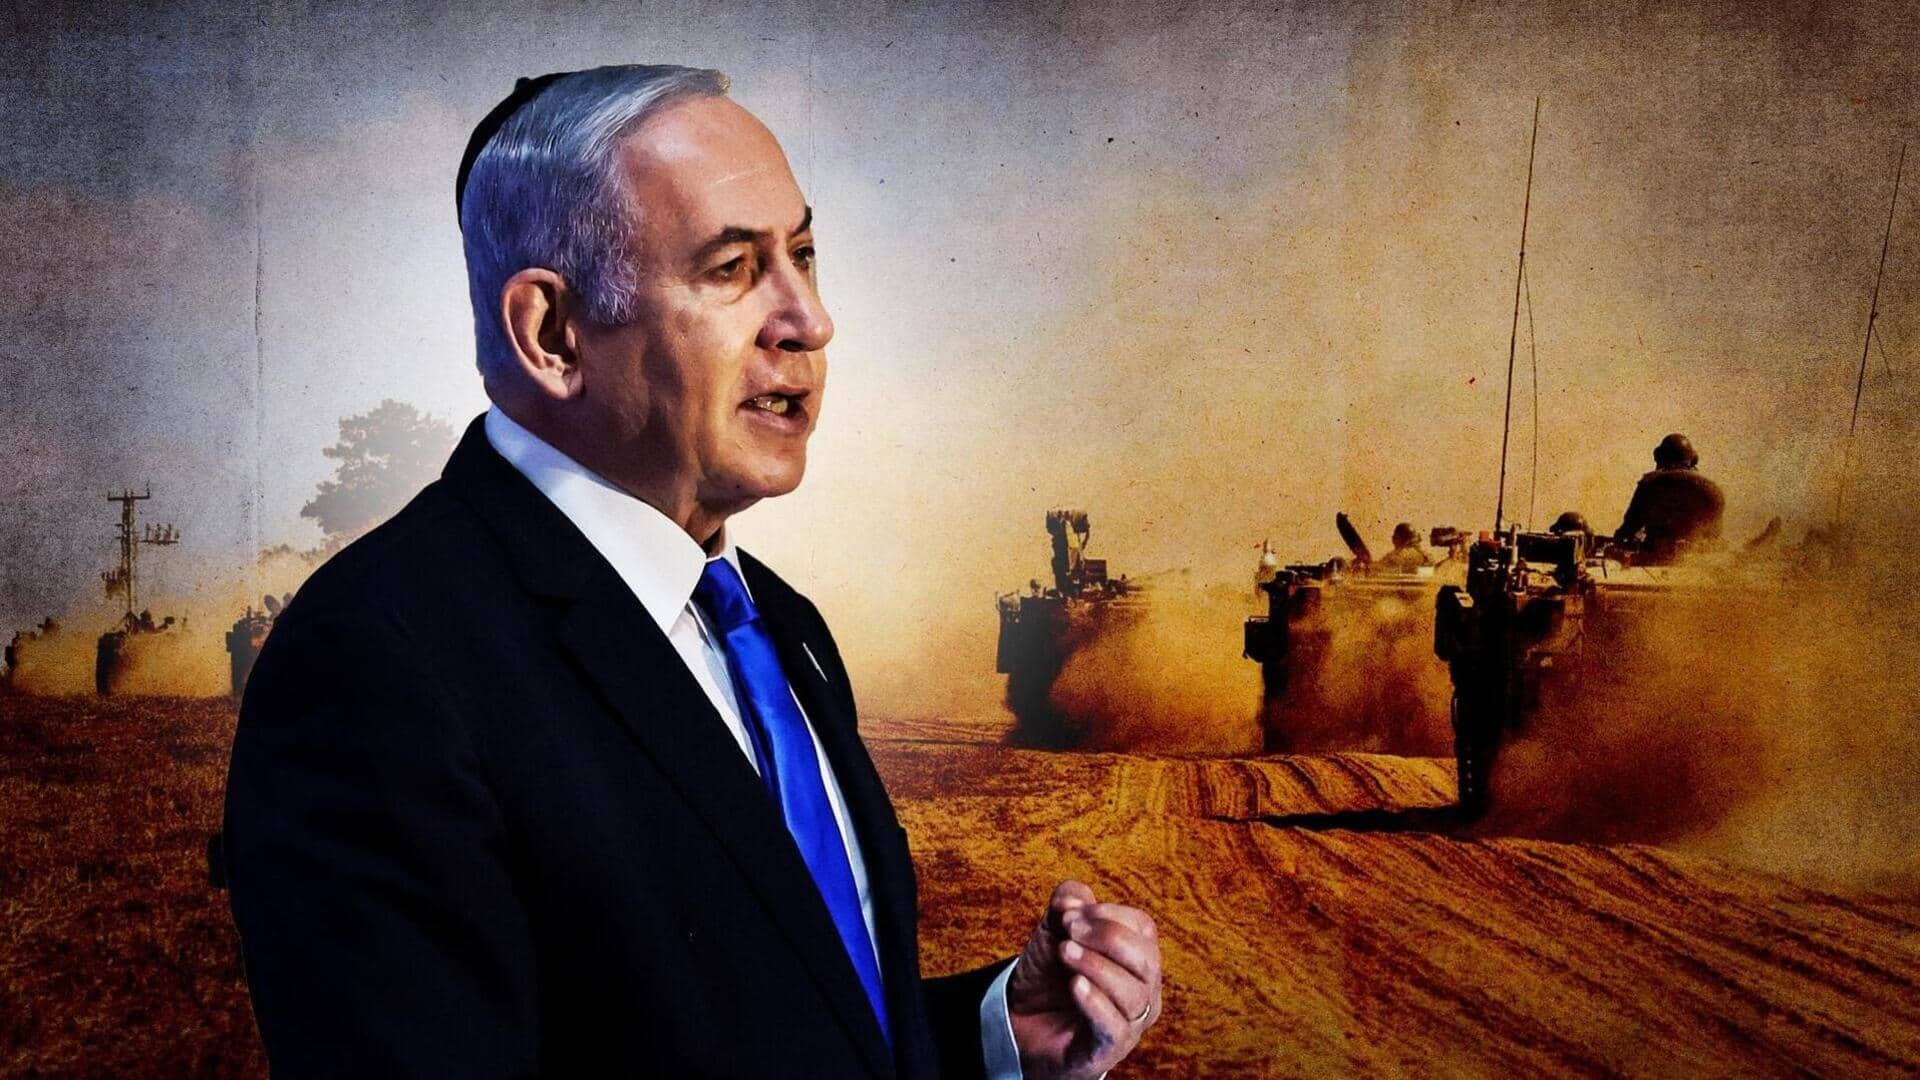 Israel preparing ground invasion of Gaza, won't give specifics: Netanyahu